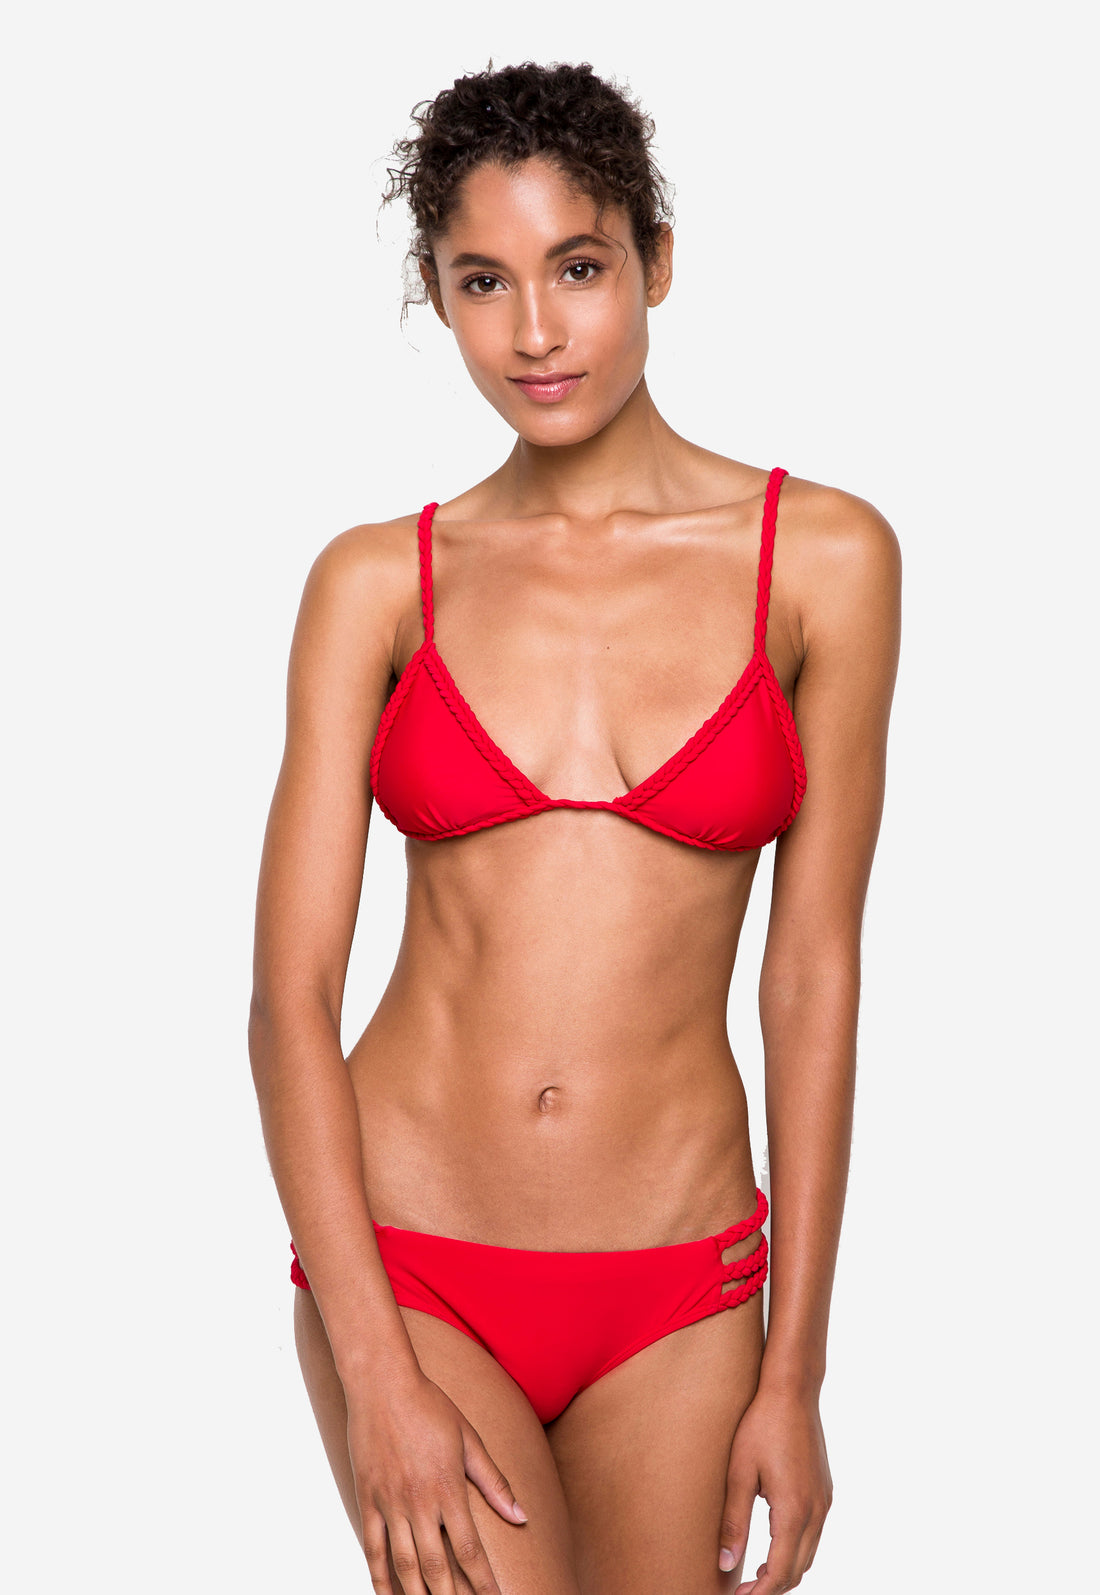 Braided Shore Bikini Top